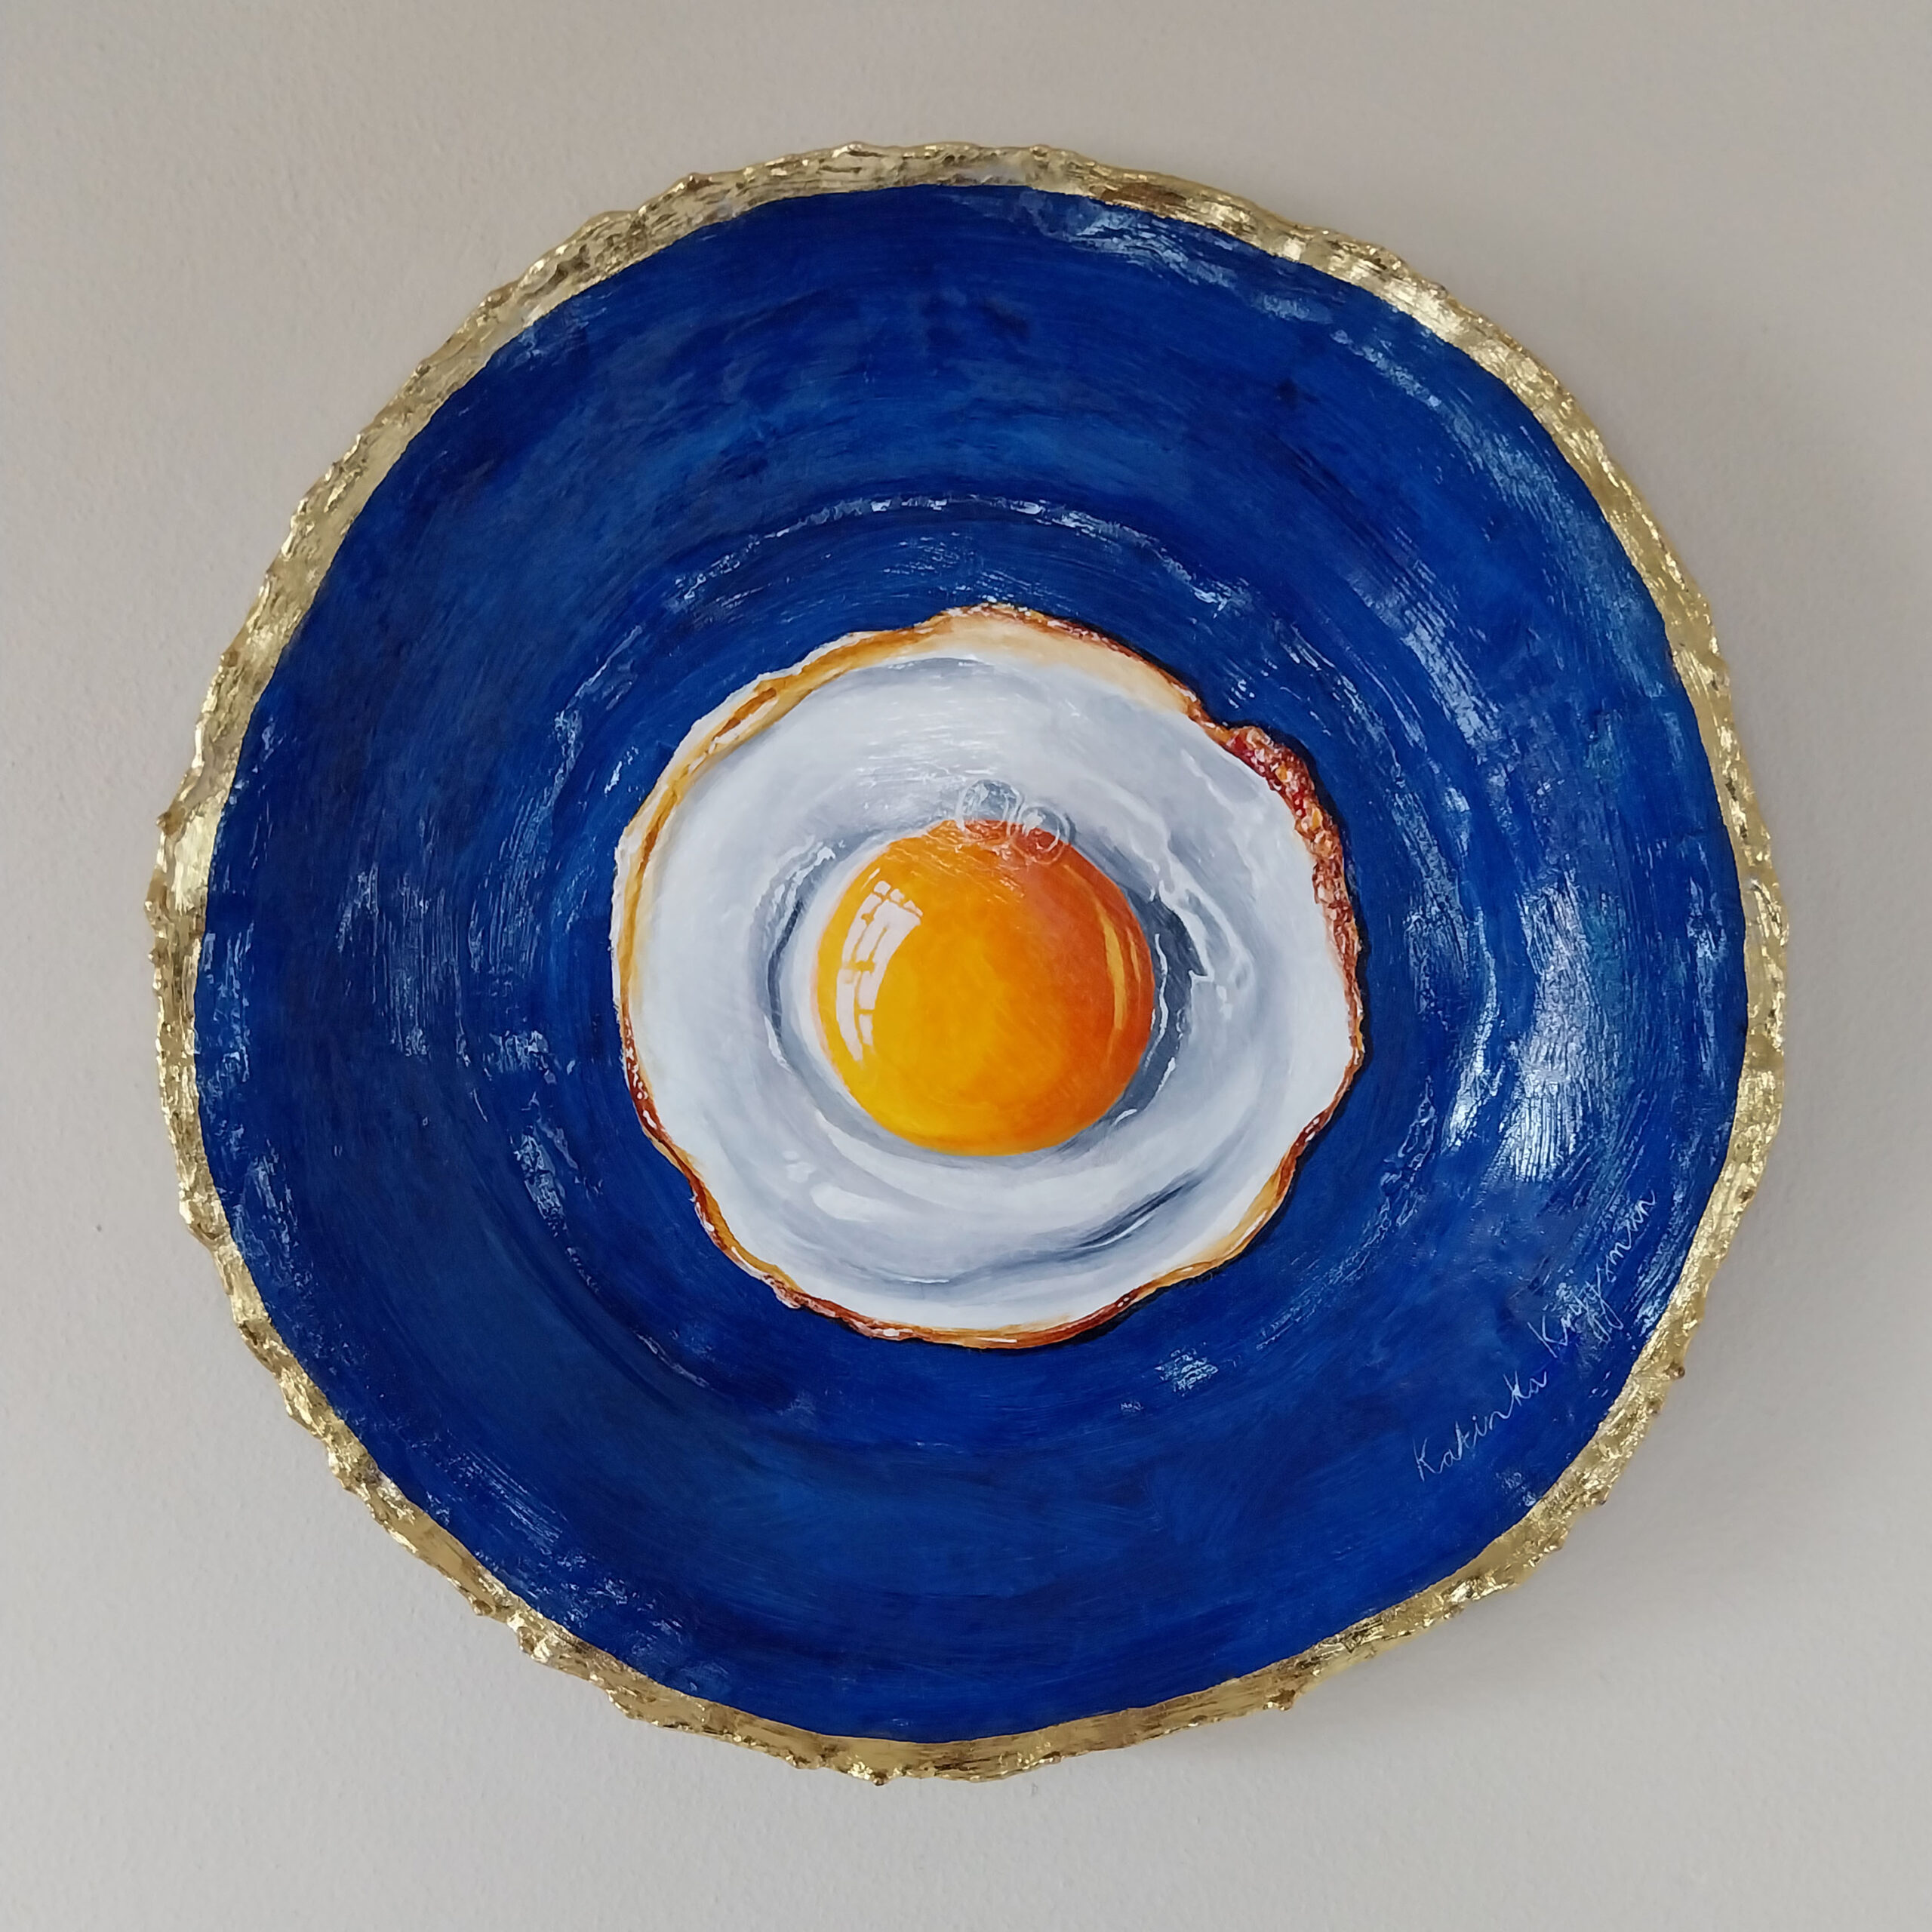 Kunst: gebakken ei ultramarijn / oeuf frit outremer van kunstenaar Katinka Krijgsman